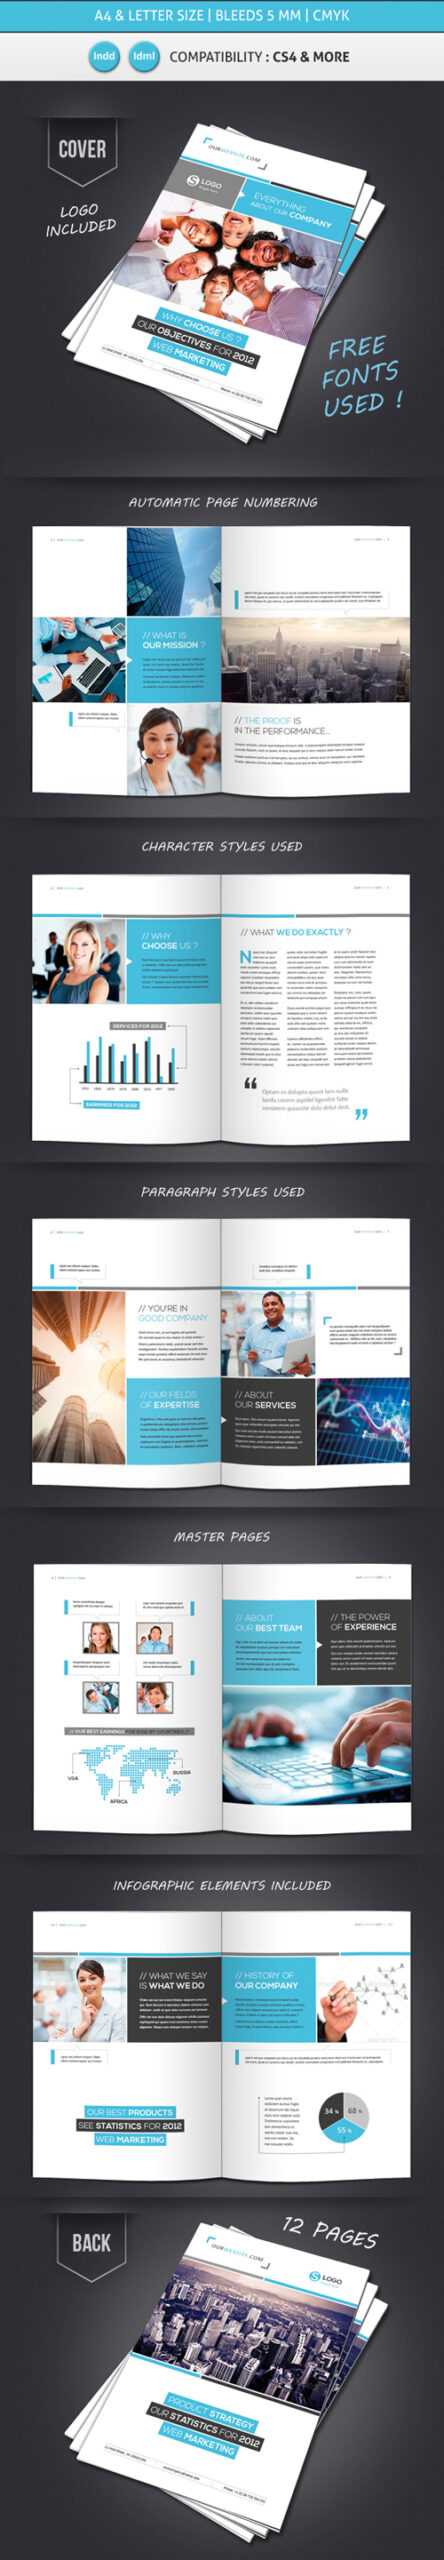 Professional Brochure Designs | Design | Graphic Design Junction Inside 12 Page Brochure Template